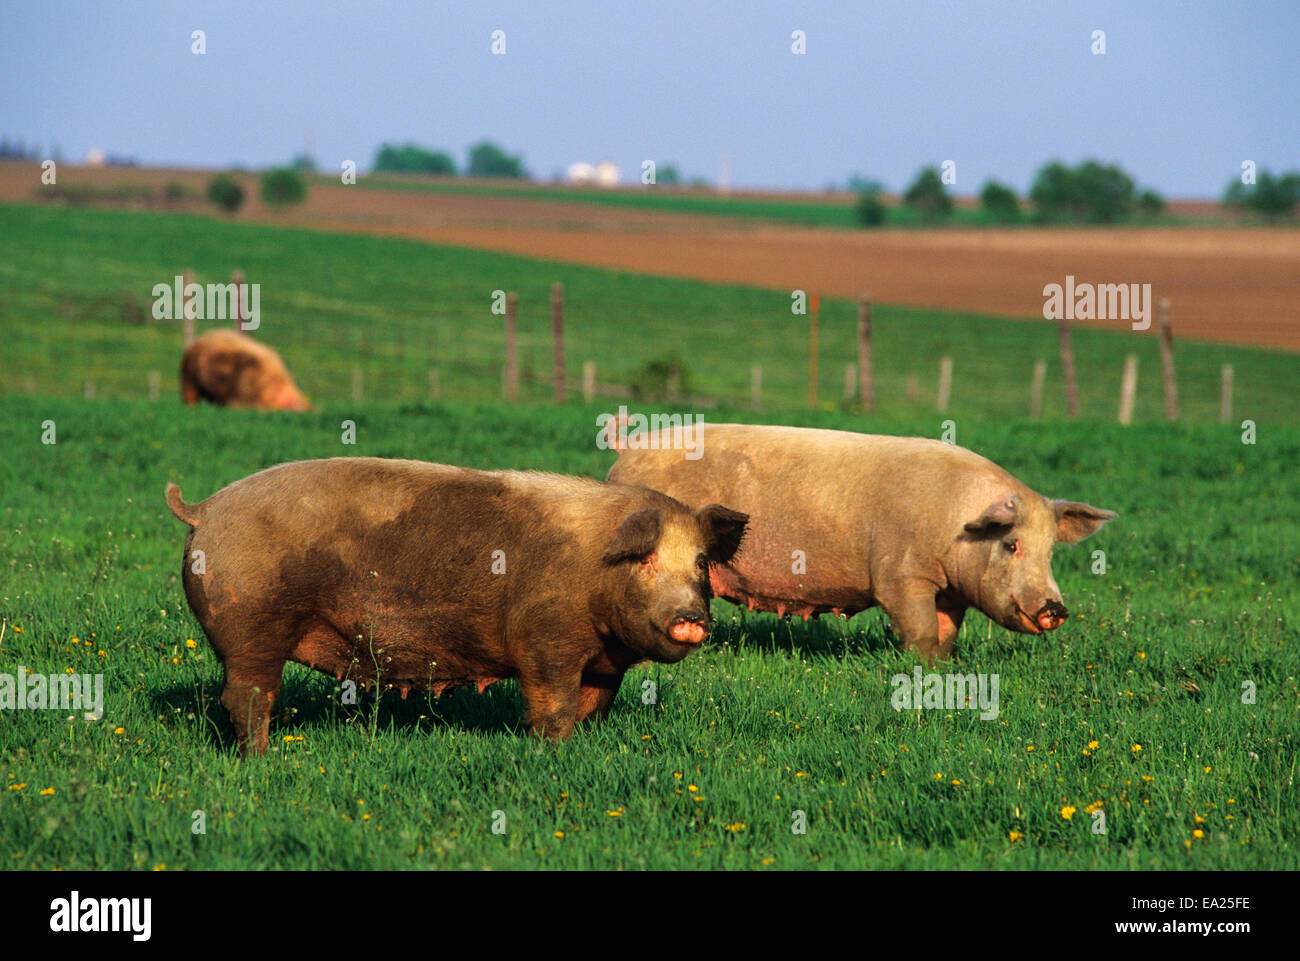 Livestock - Free range pigs on a green pasture on a hog farm